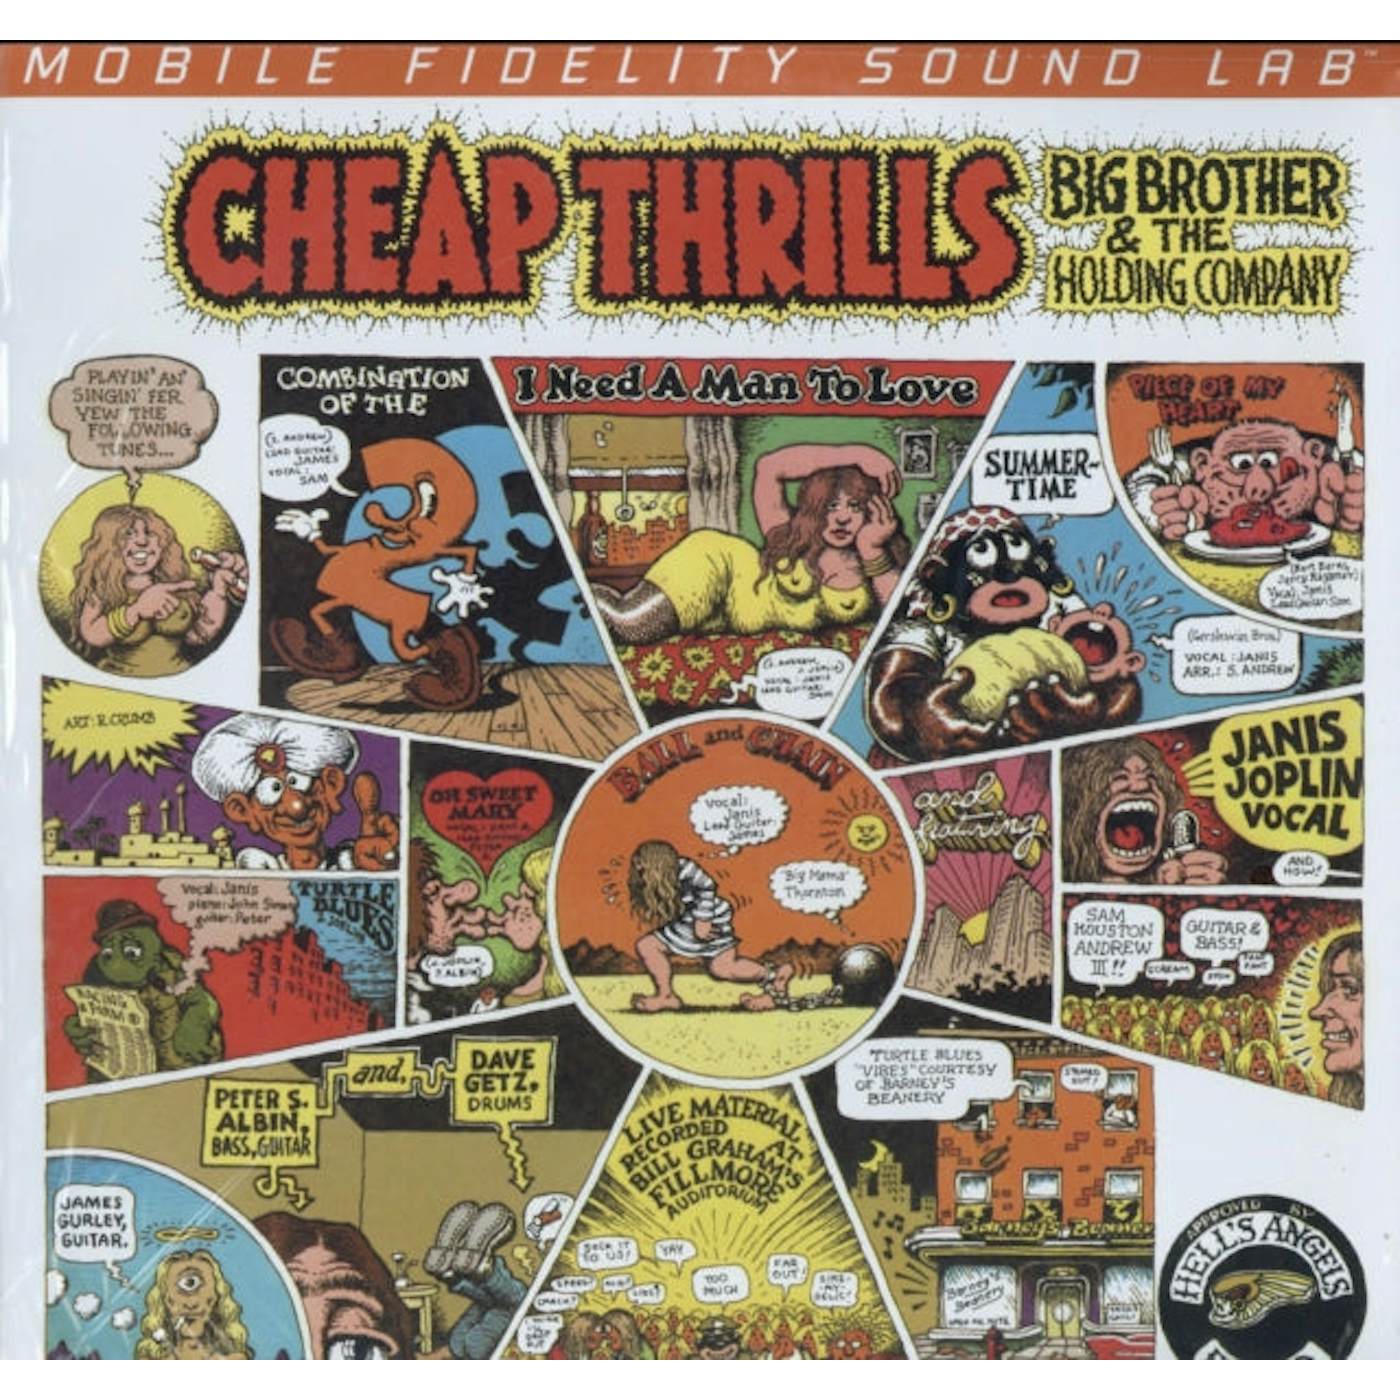 Janis Joplin & Big Brother & The Holding Company LP Vinyl Record - Cheap Thrills